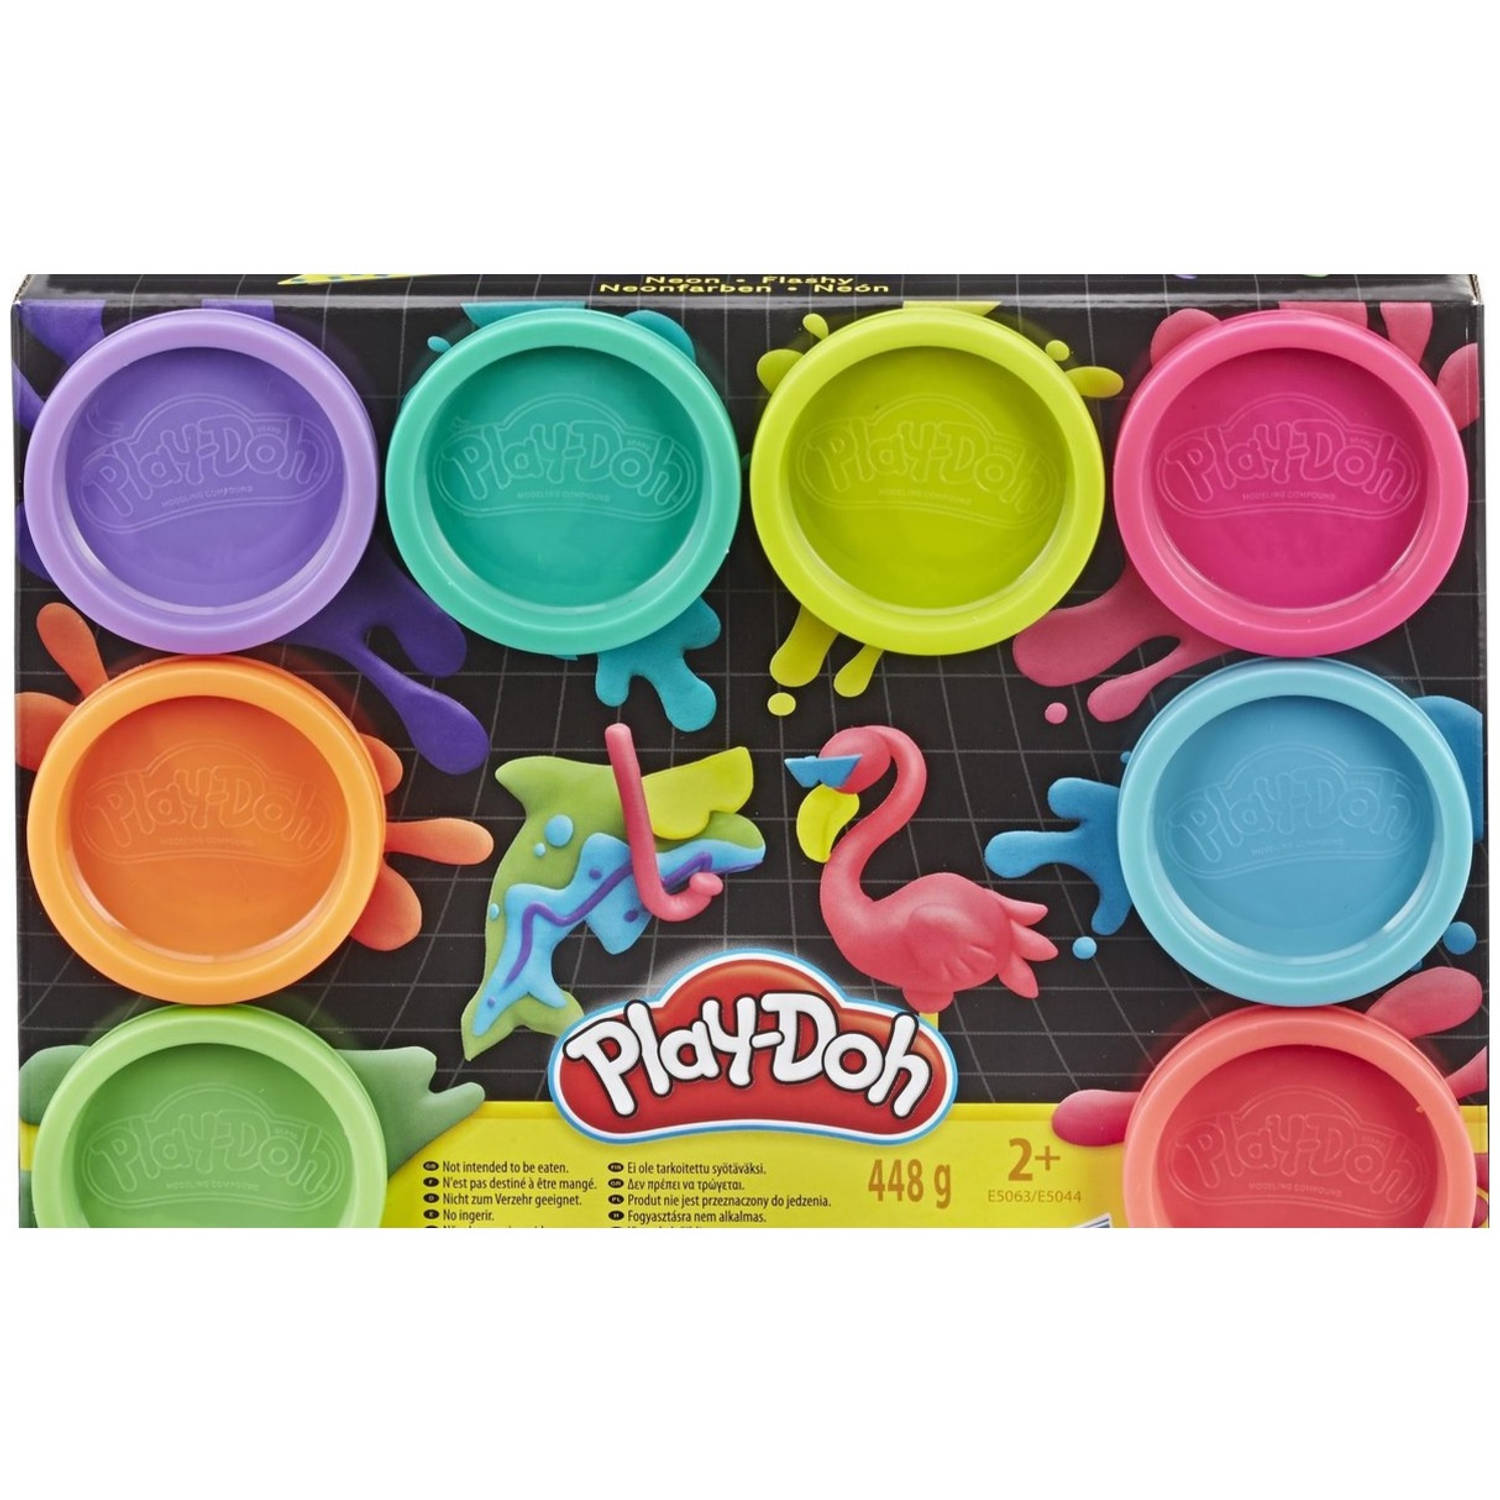 Play-doh Kleiset Junior 8-delig 448 Gram